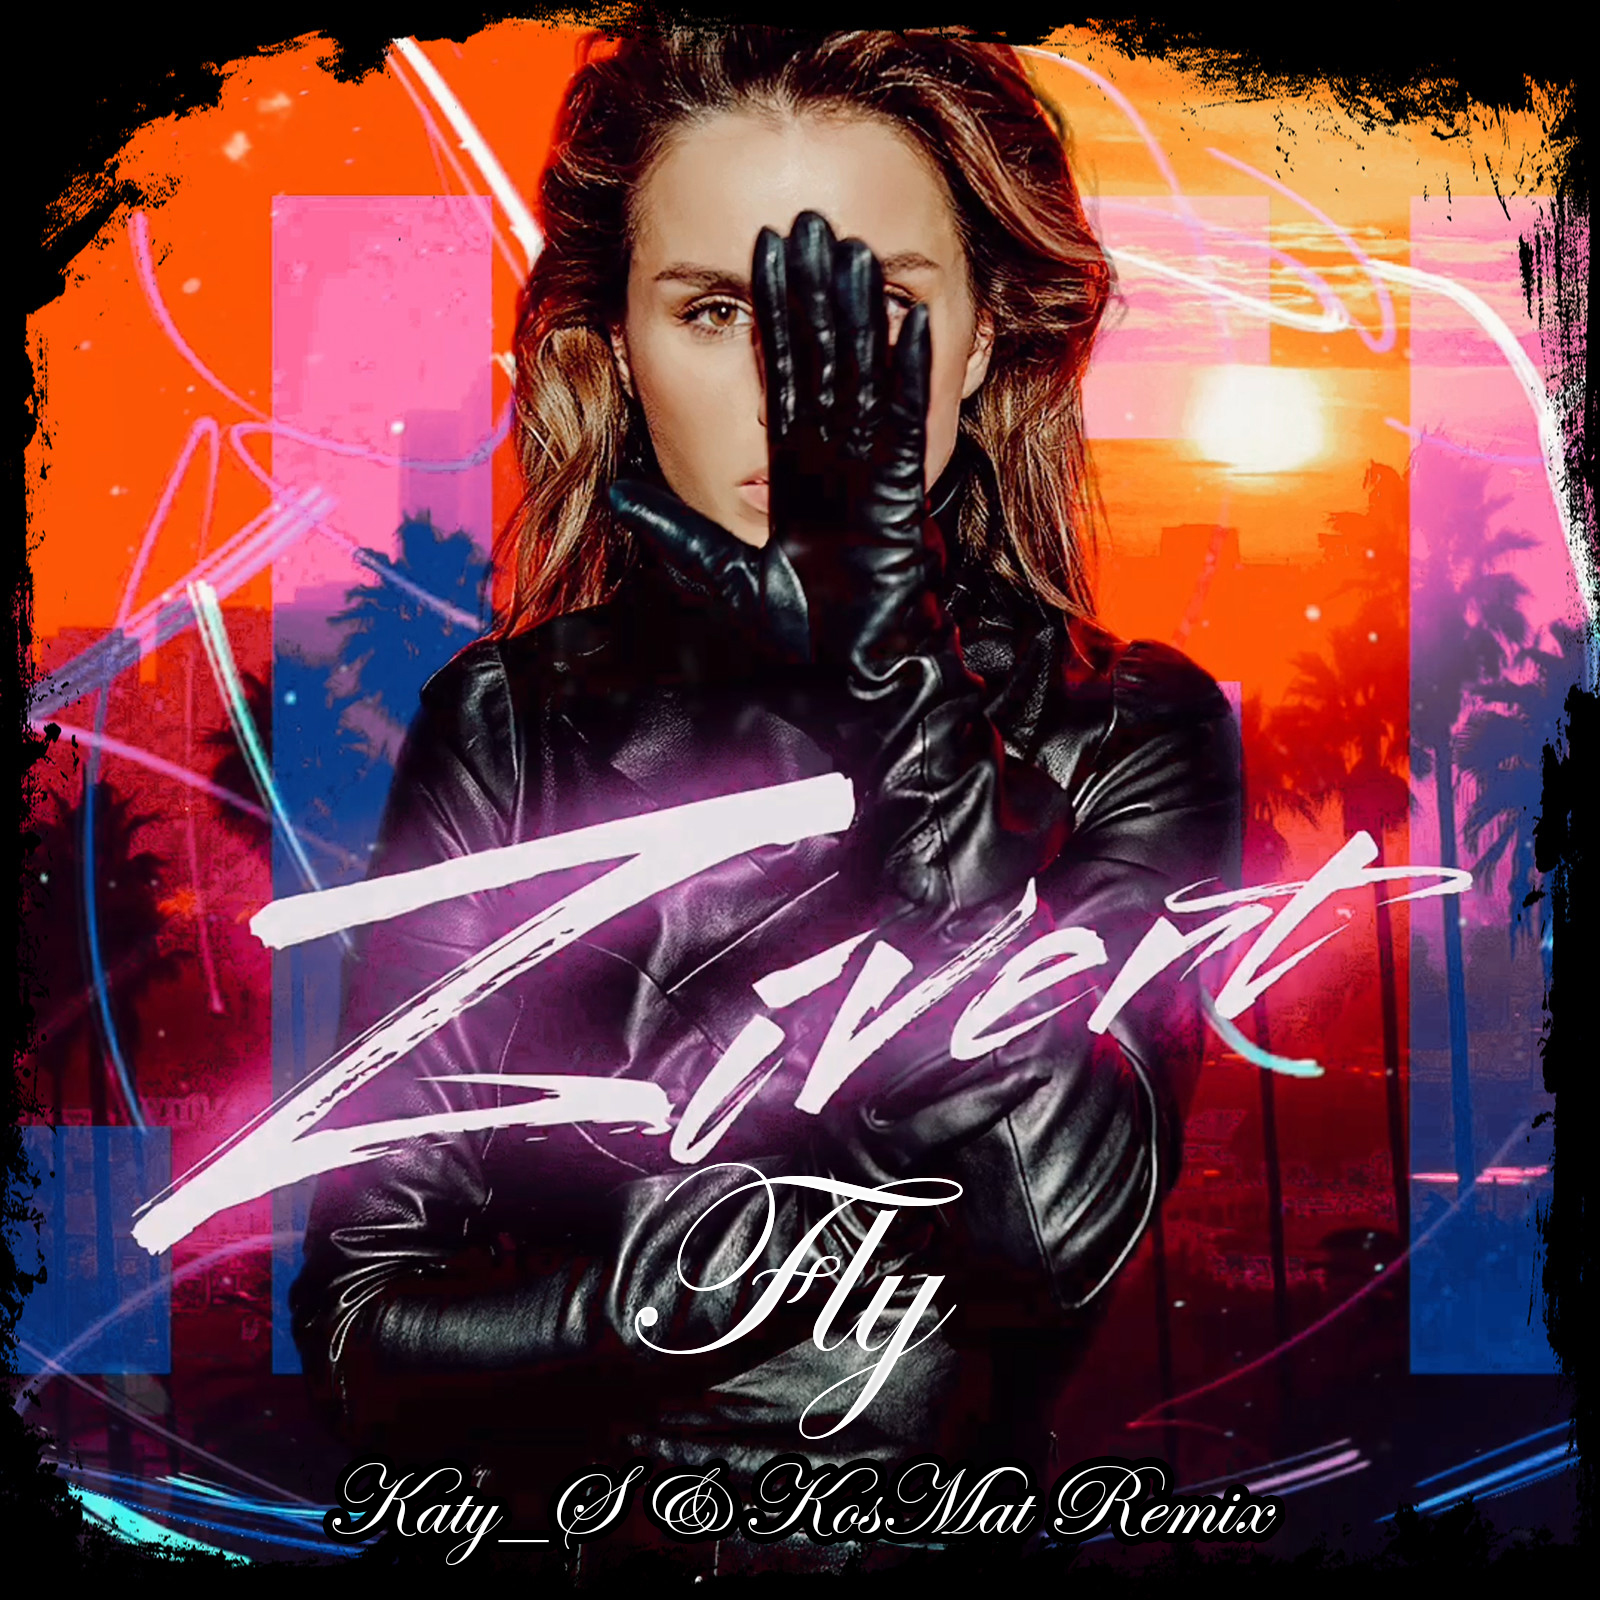 Zivert - Fly, Zivert - Fly (Katy_S & KosMat Remix), Zivert - Fly do...